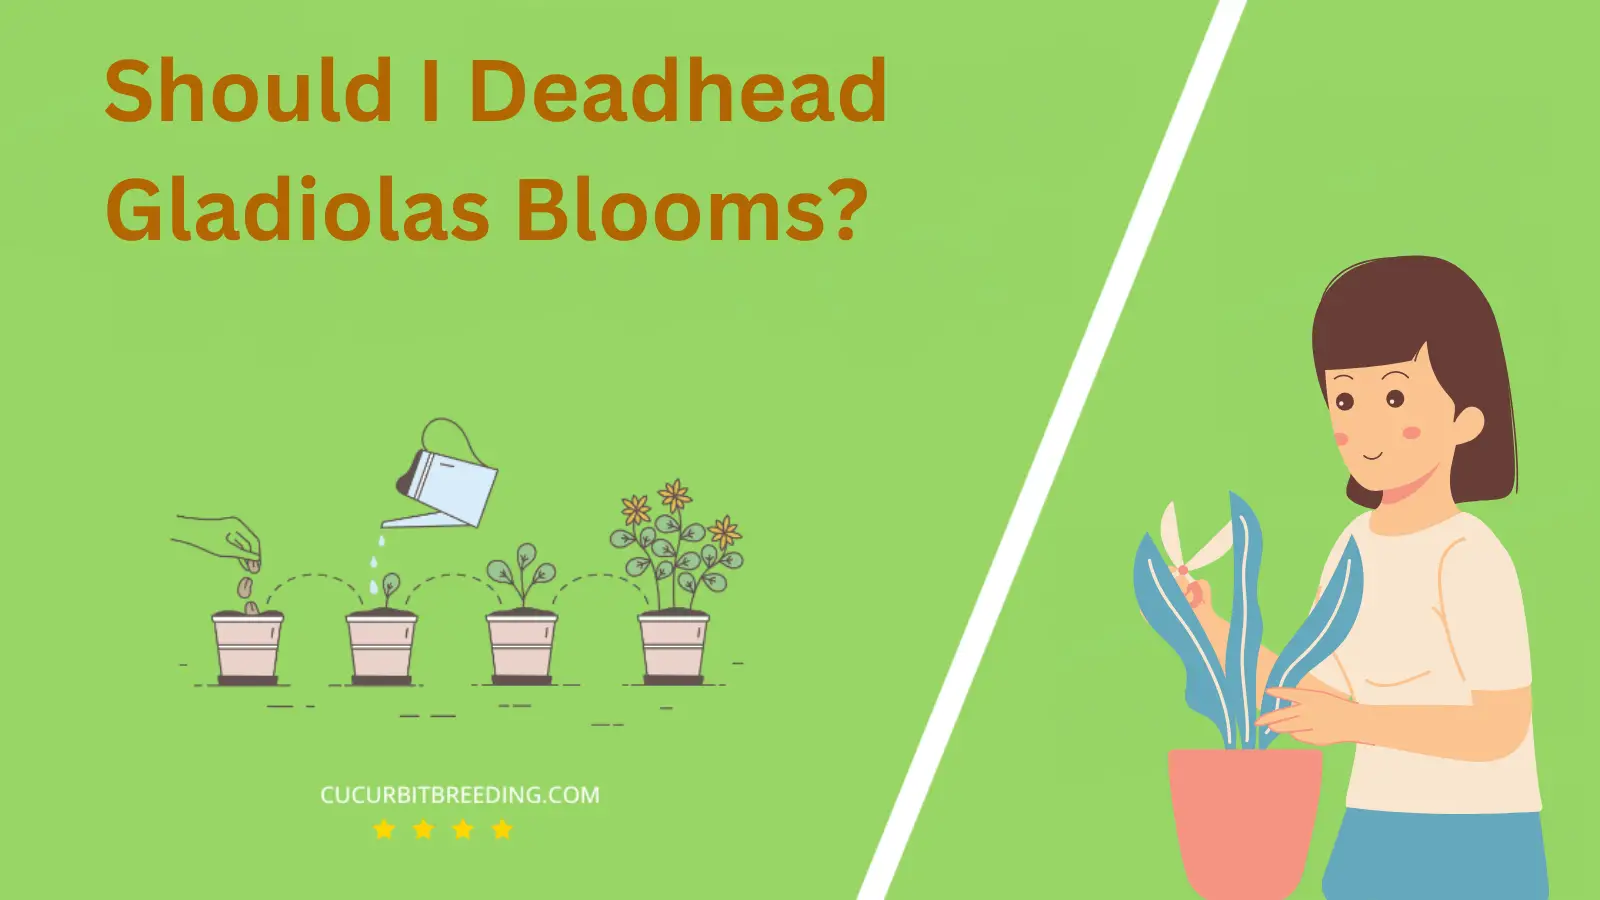 Should I Deadhead Gladiolas Blooms?